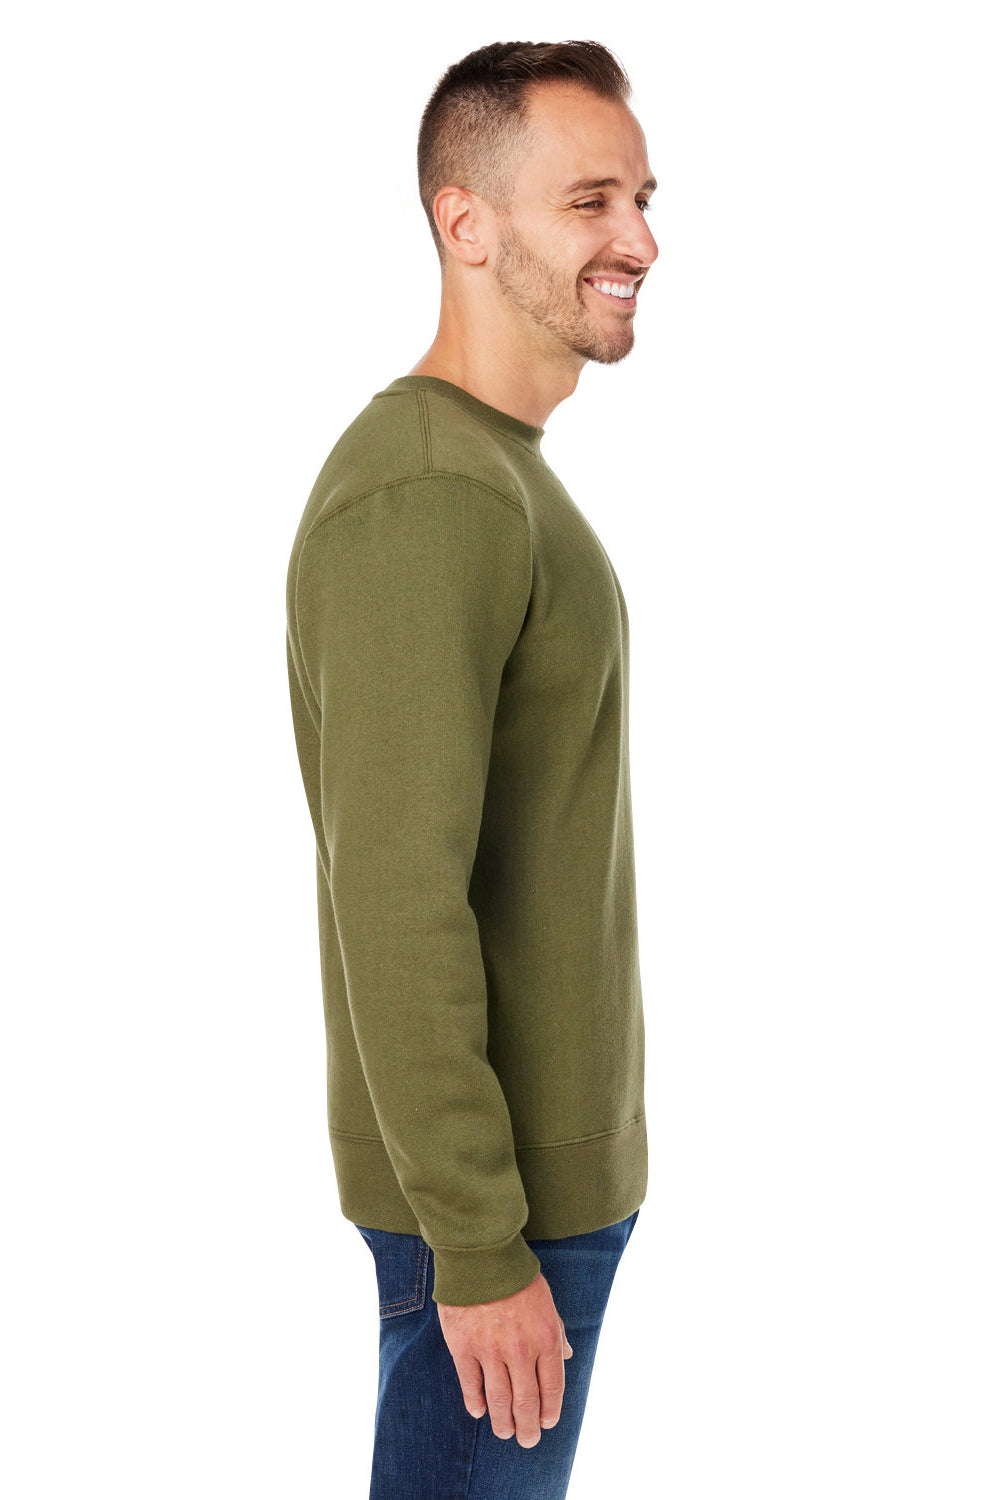 J America 8424JA Mens Premium Fleece Crewneck Sweatshirt Military Green Side